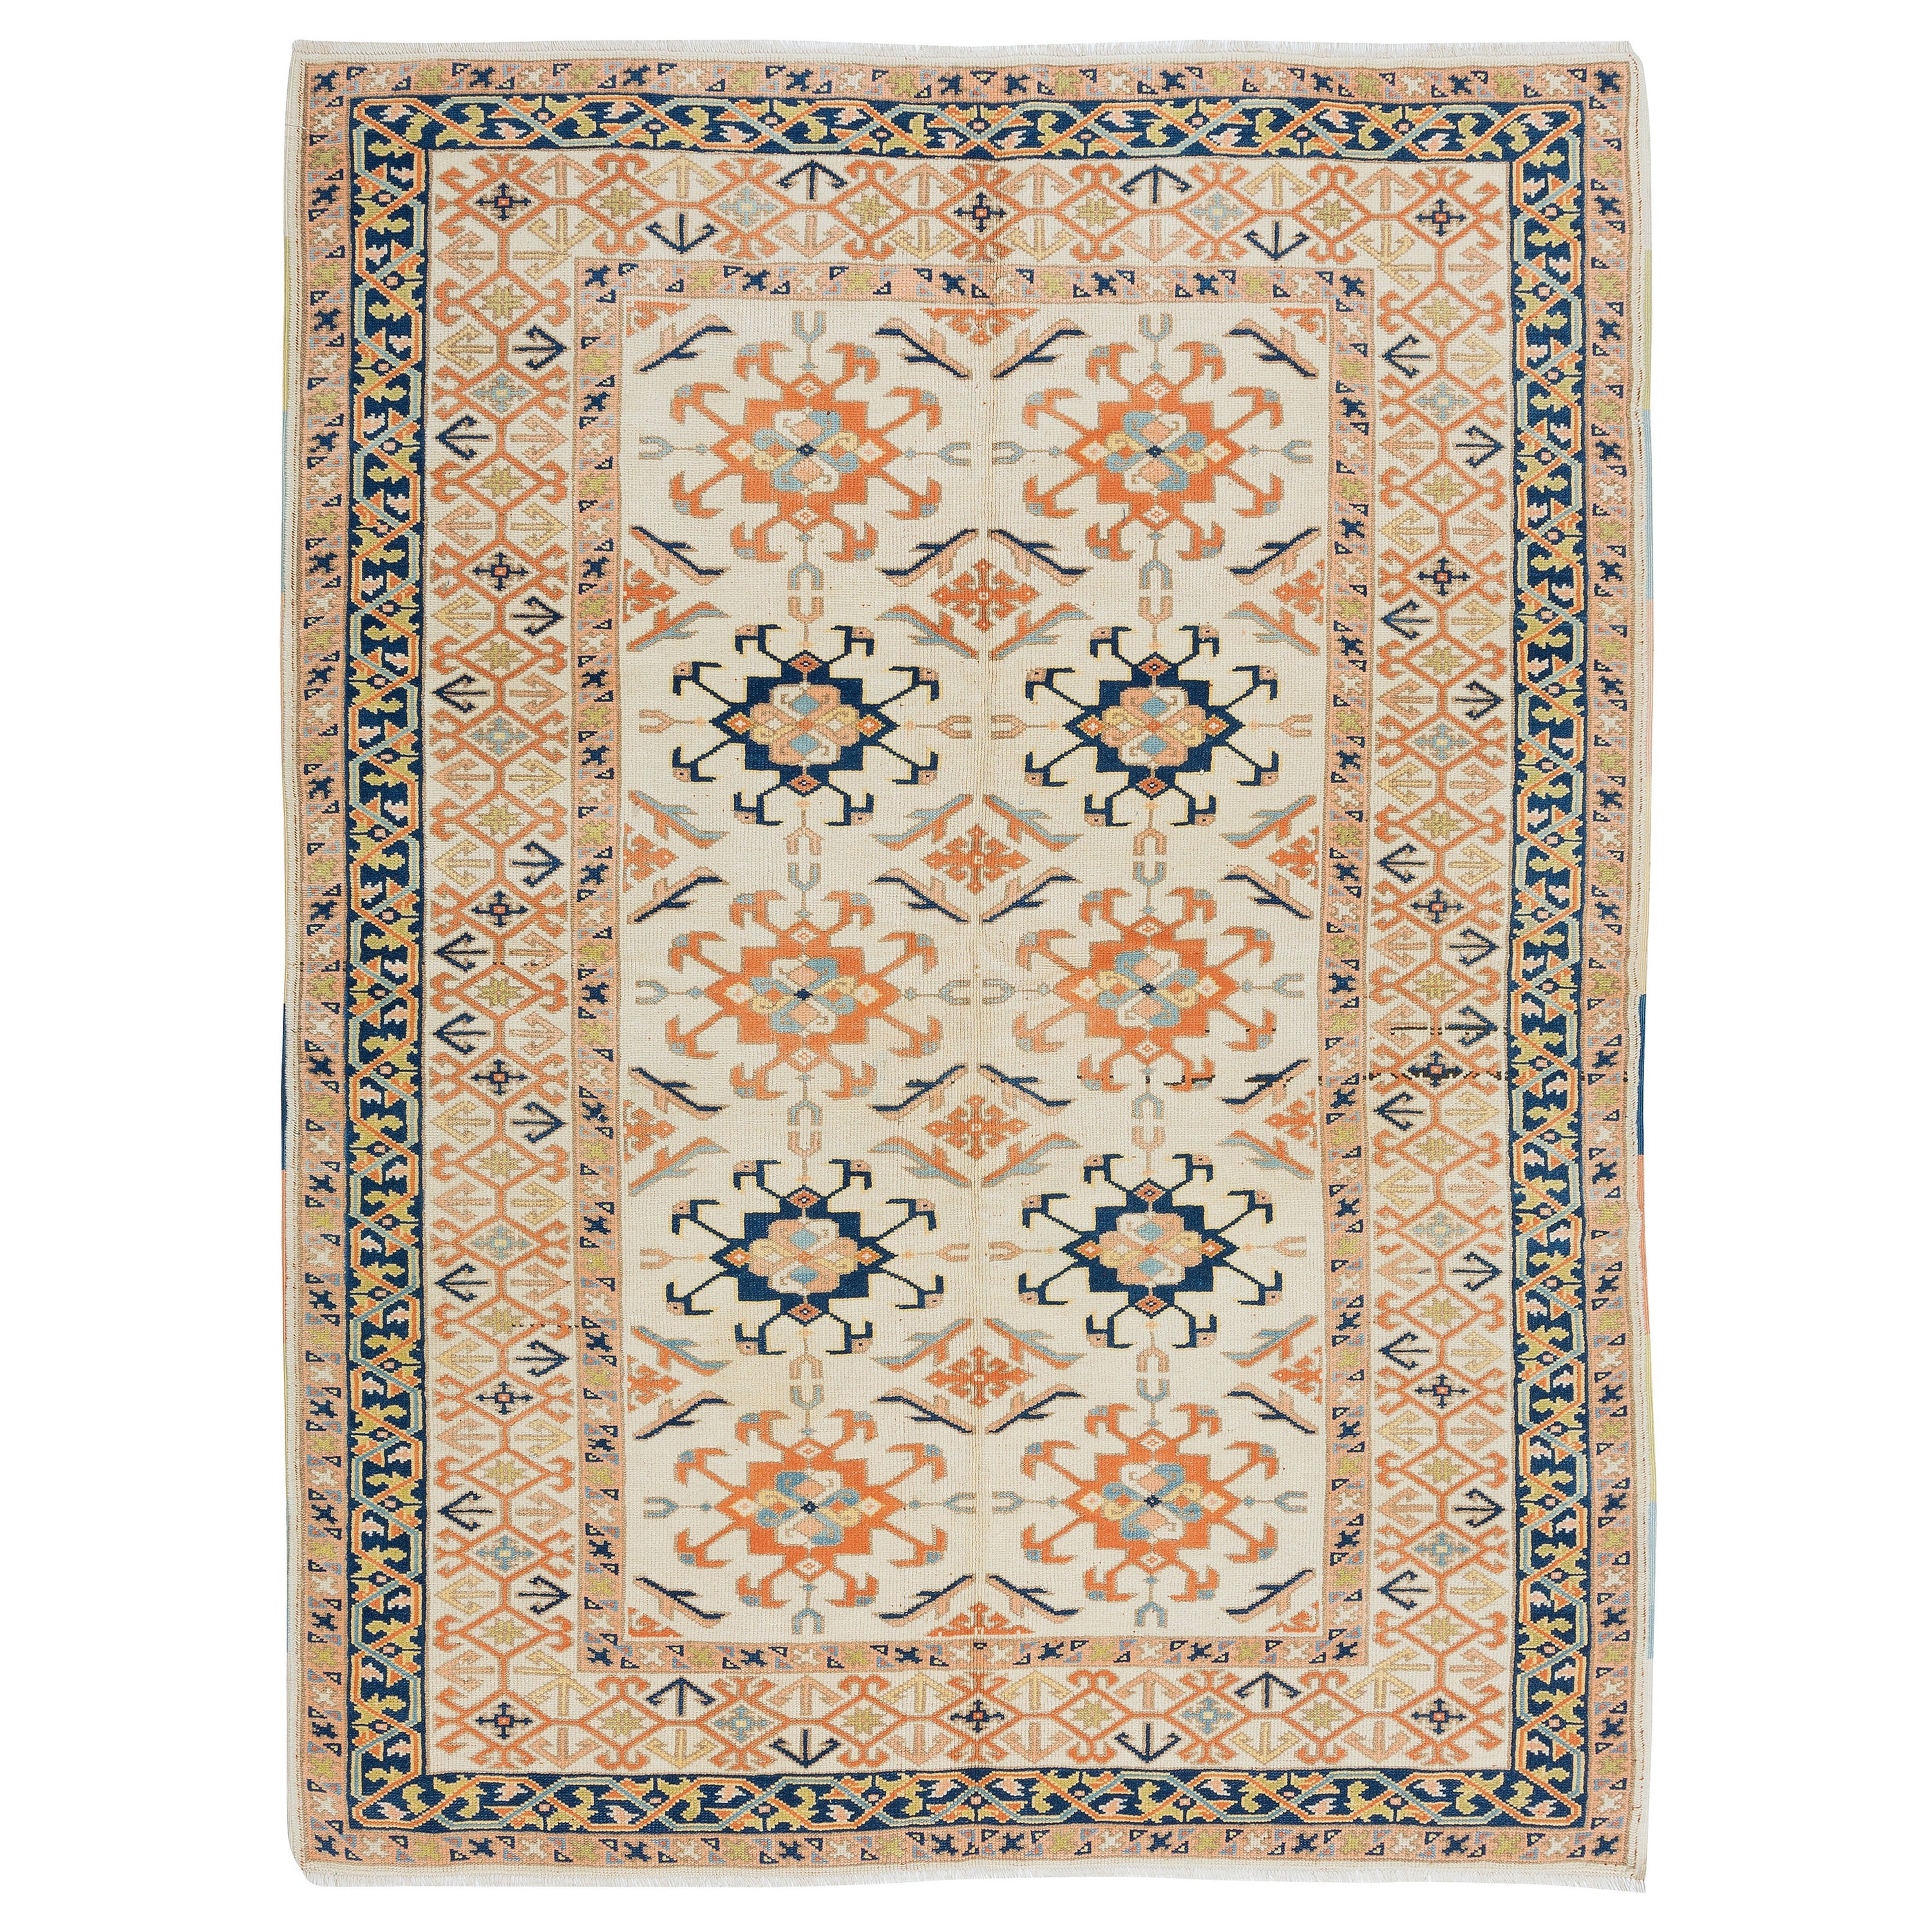 5.2x7 Ft Handmade Wool Area Rug, Vintage Turkish Carpet for Living Room Decor For Sale